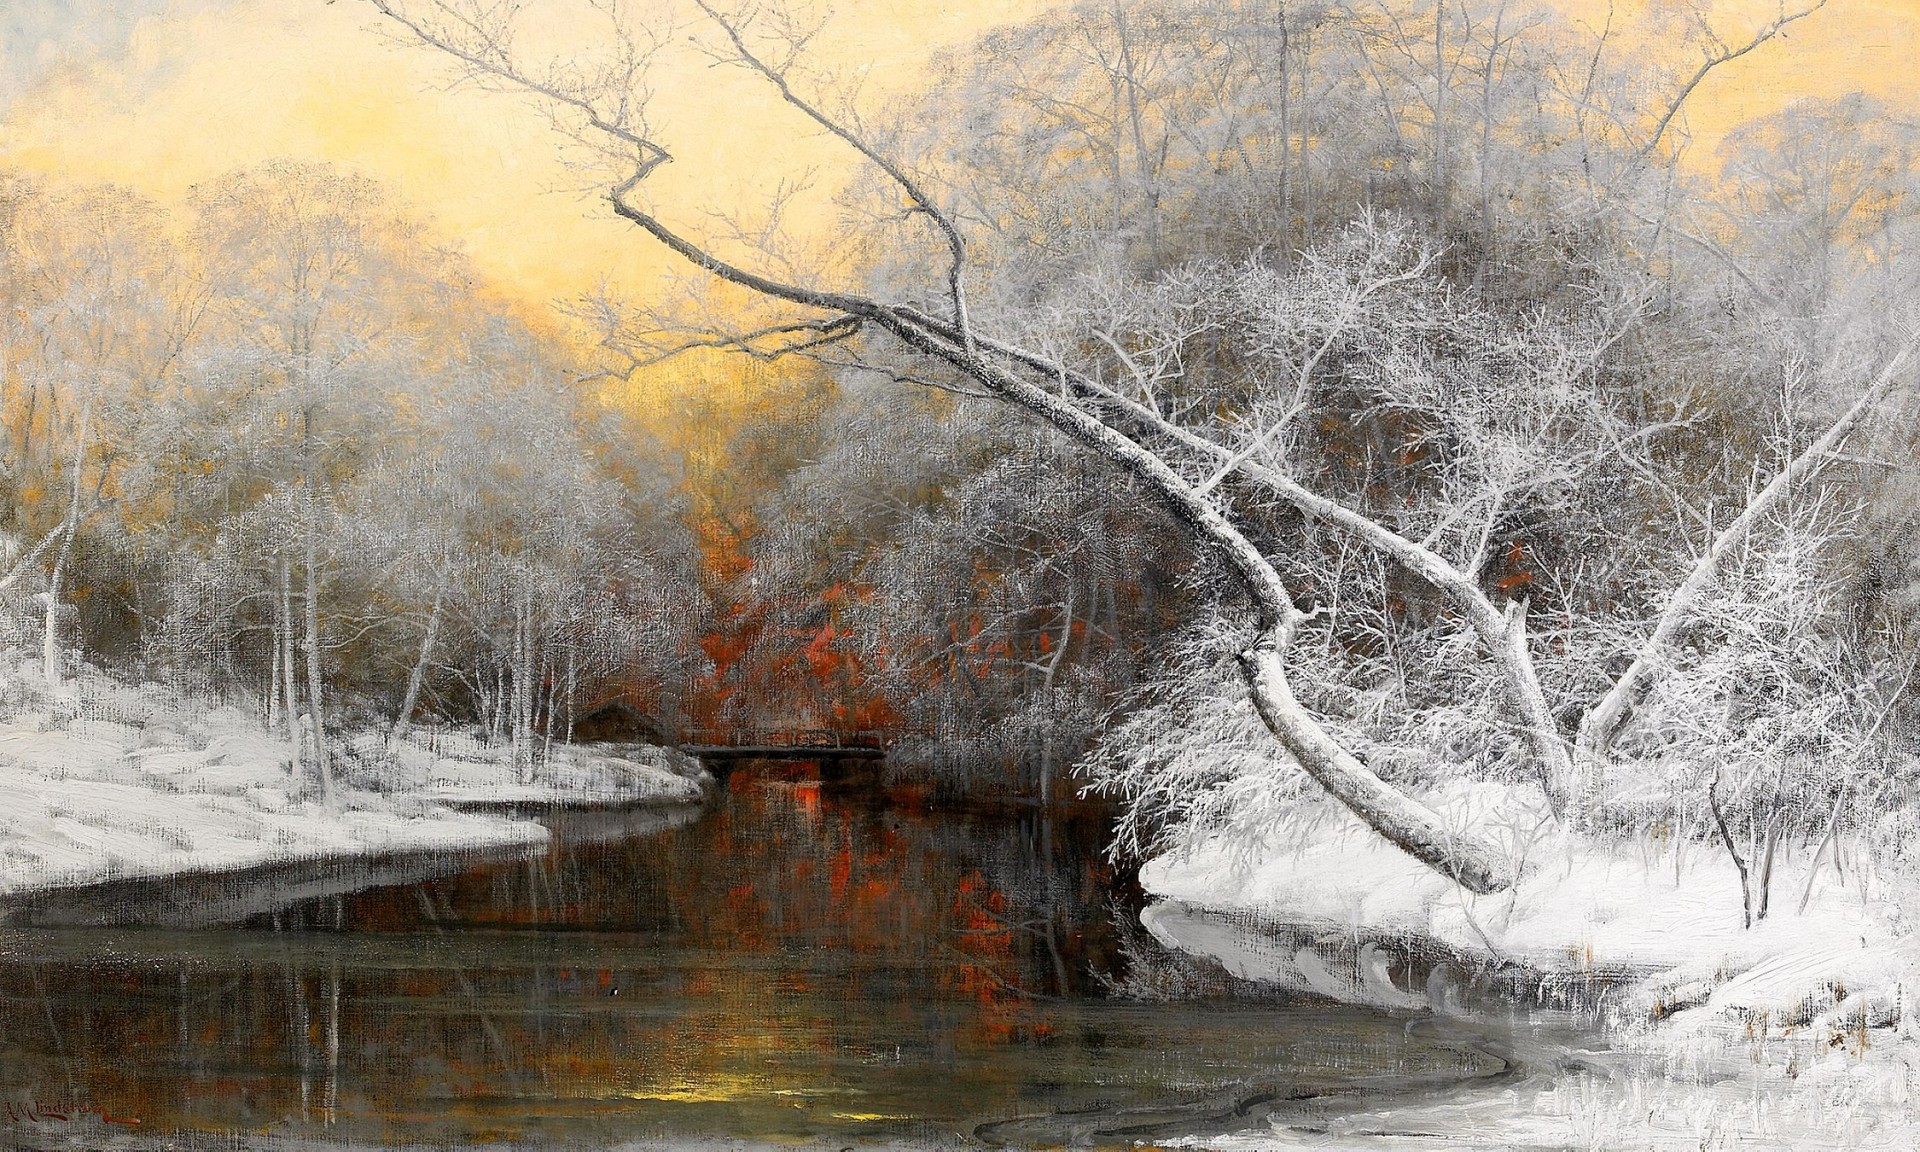 вечер – закат в цветах зимнего пейзажа арвид мауритц линдстрем зима река деревья